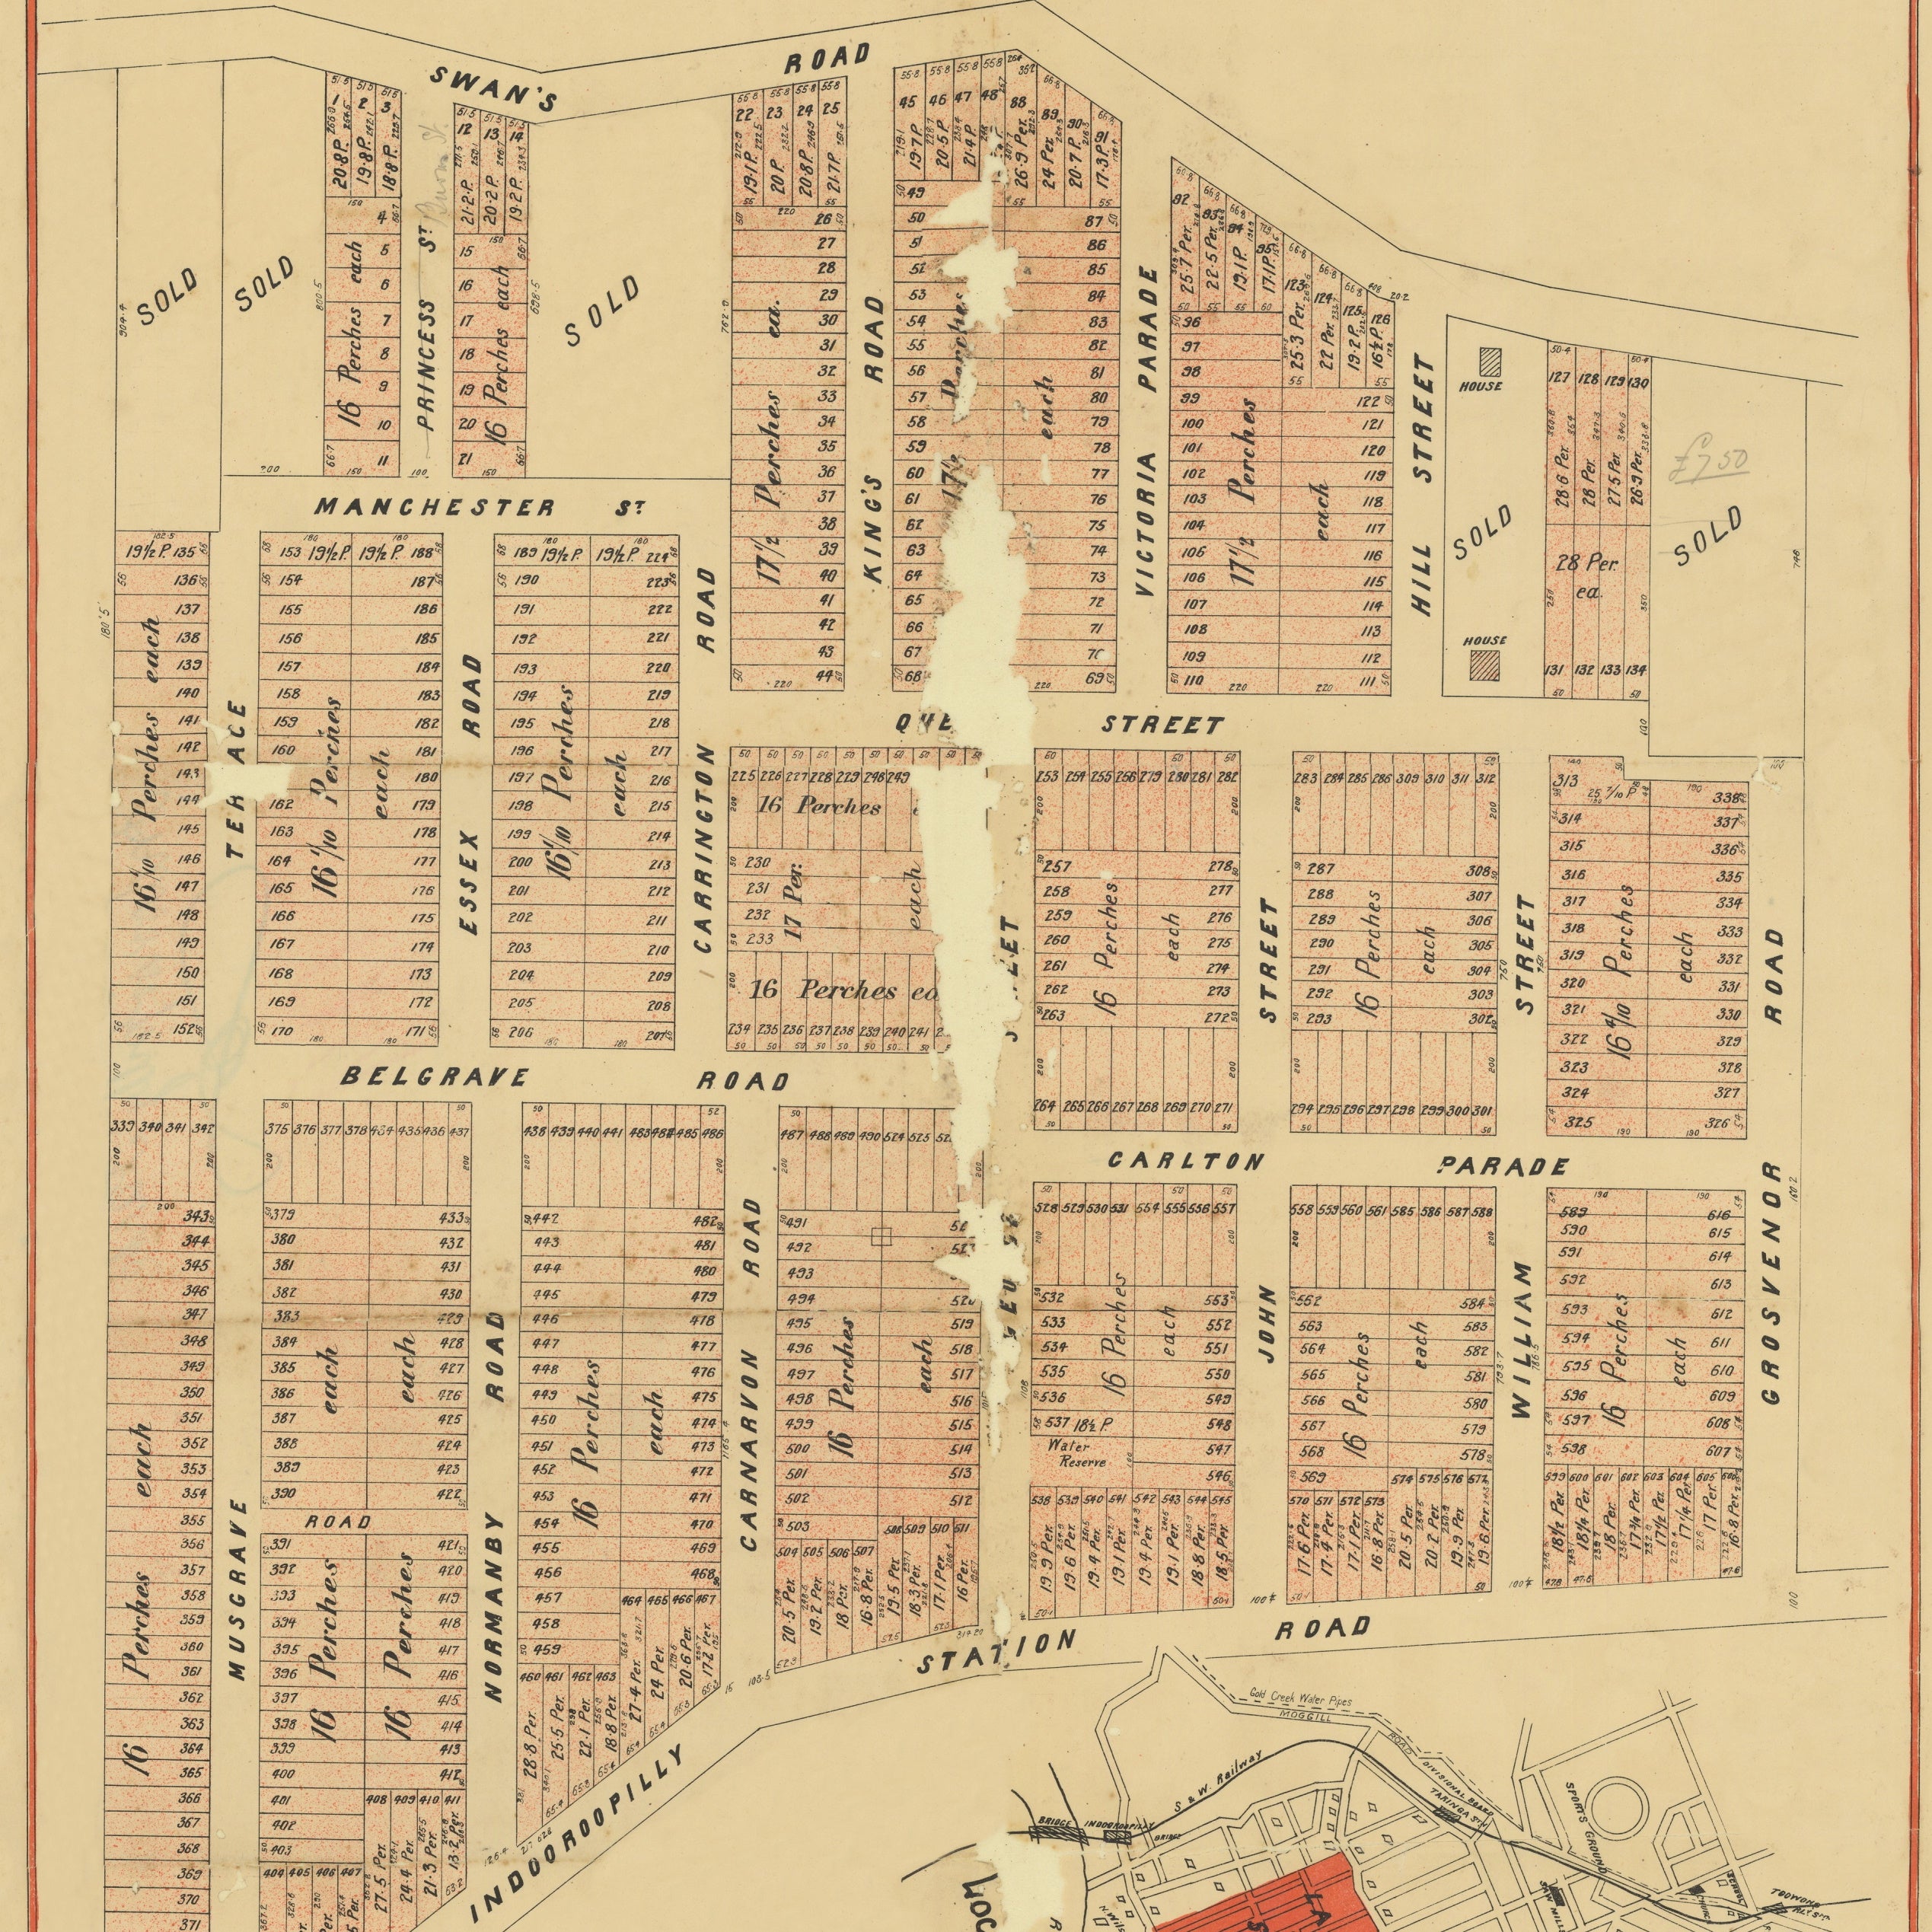 1888 Indooroopilly - Taringa and Indooroopilly Park Estate